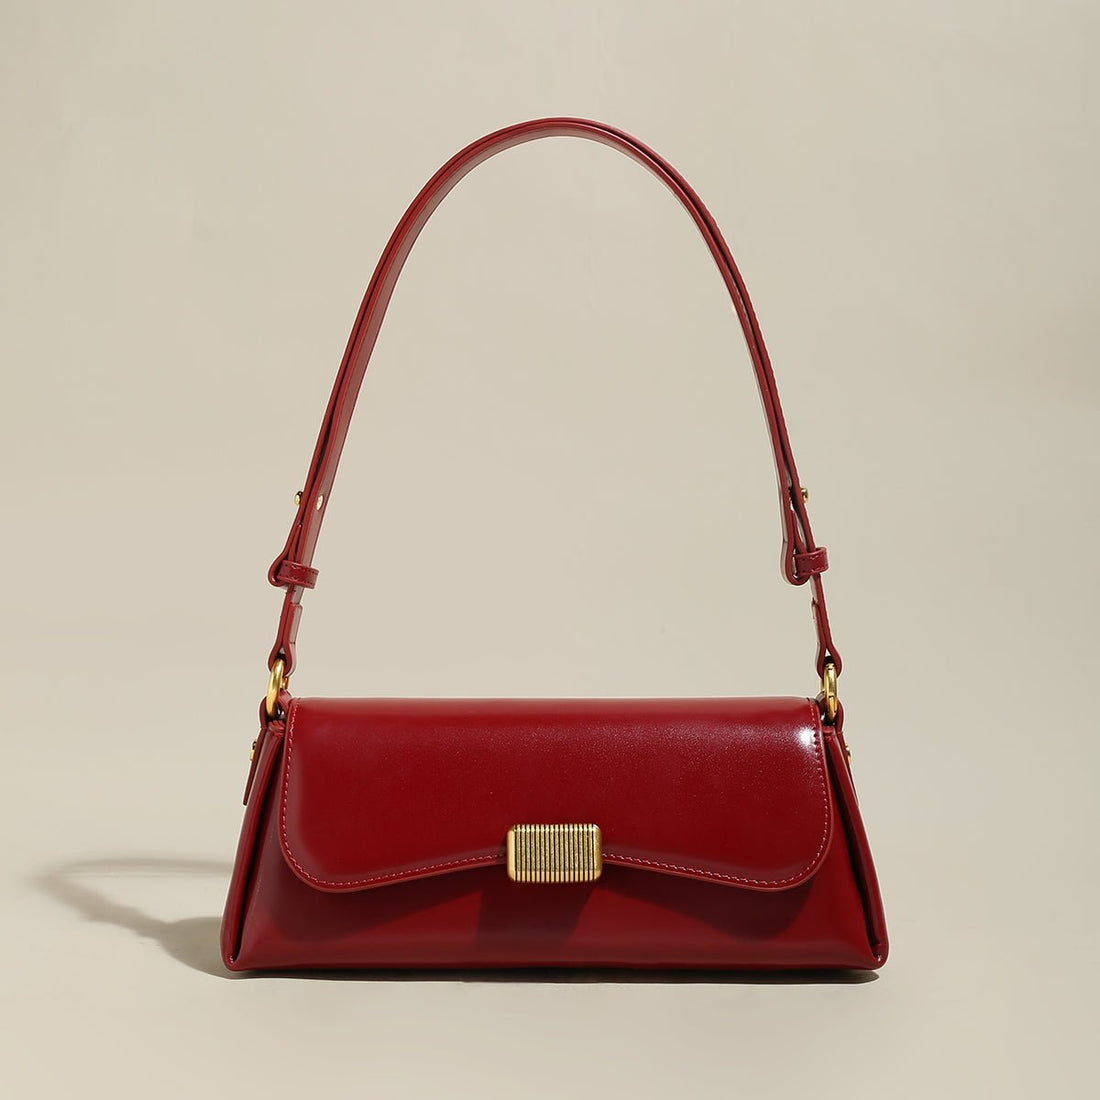 Snap By Snap Red Leather Shoulder Bag - 0cm